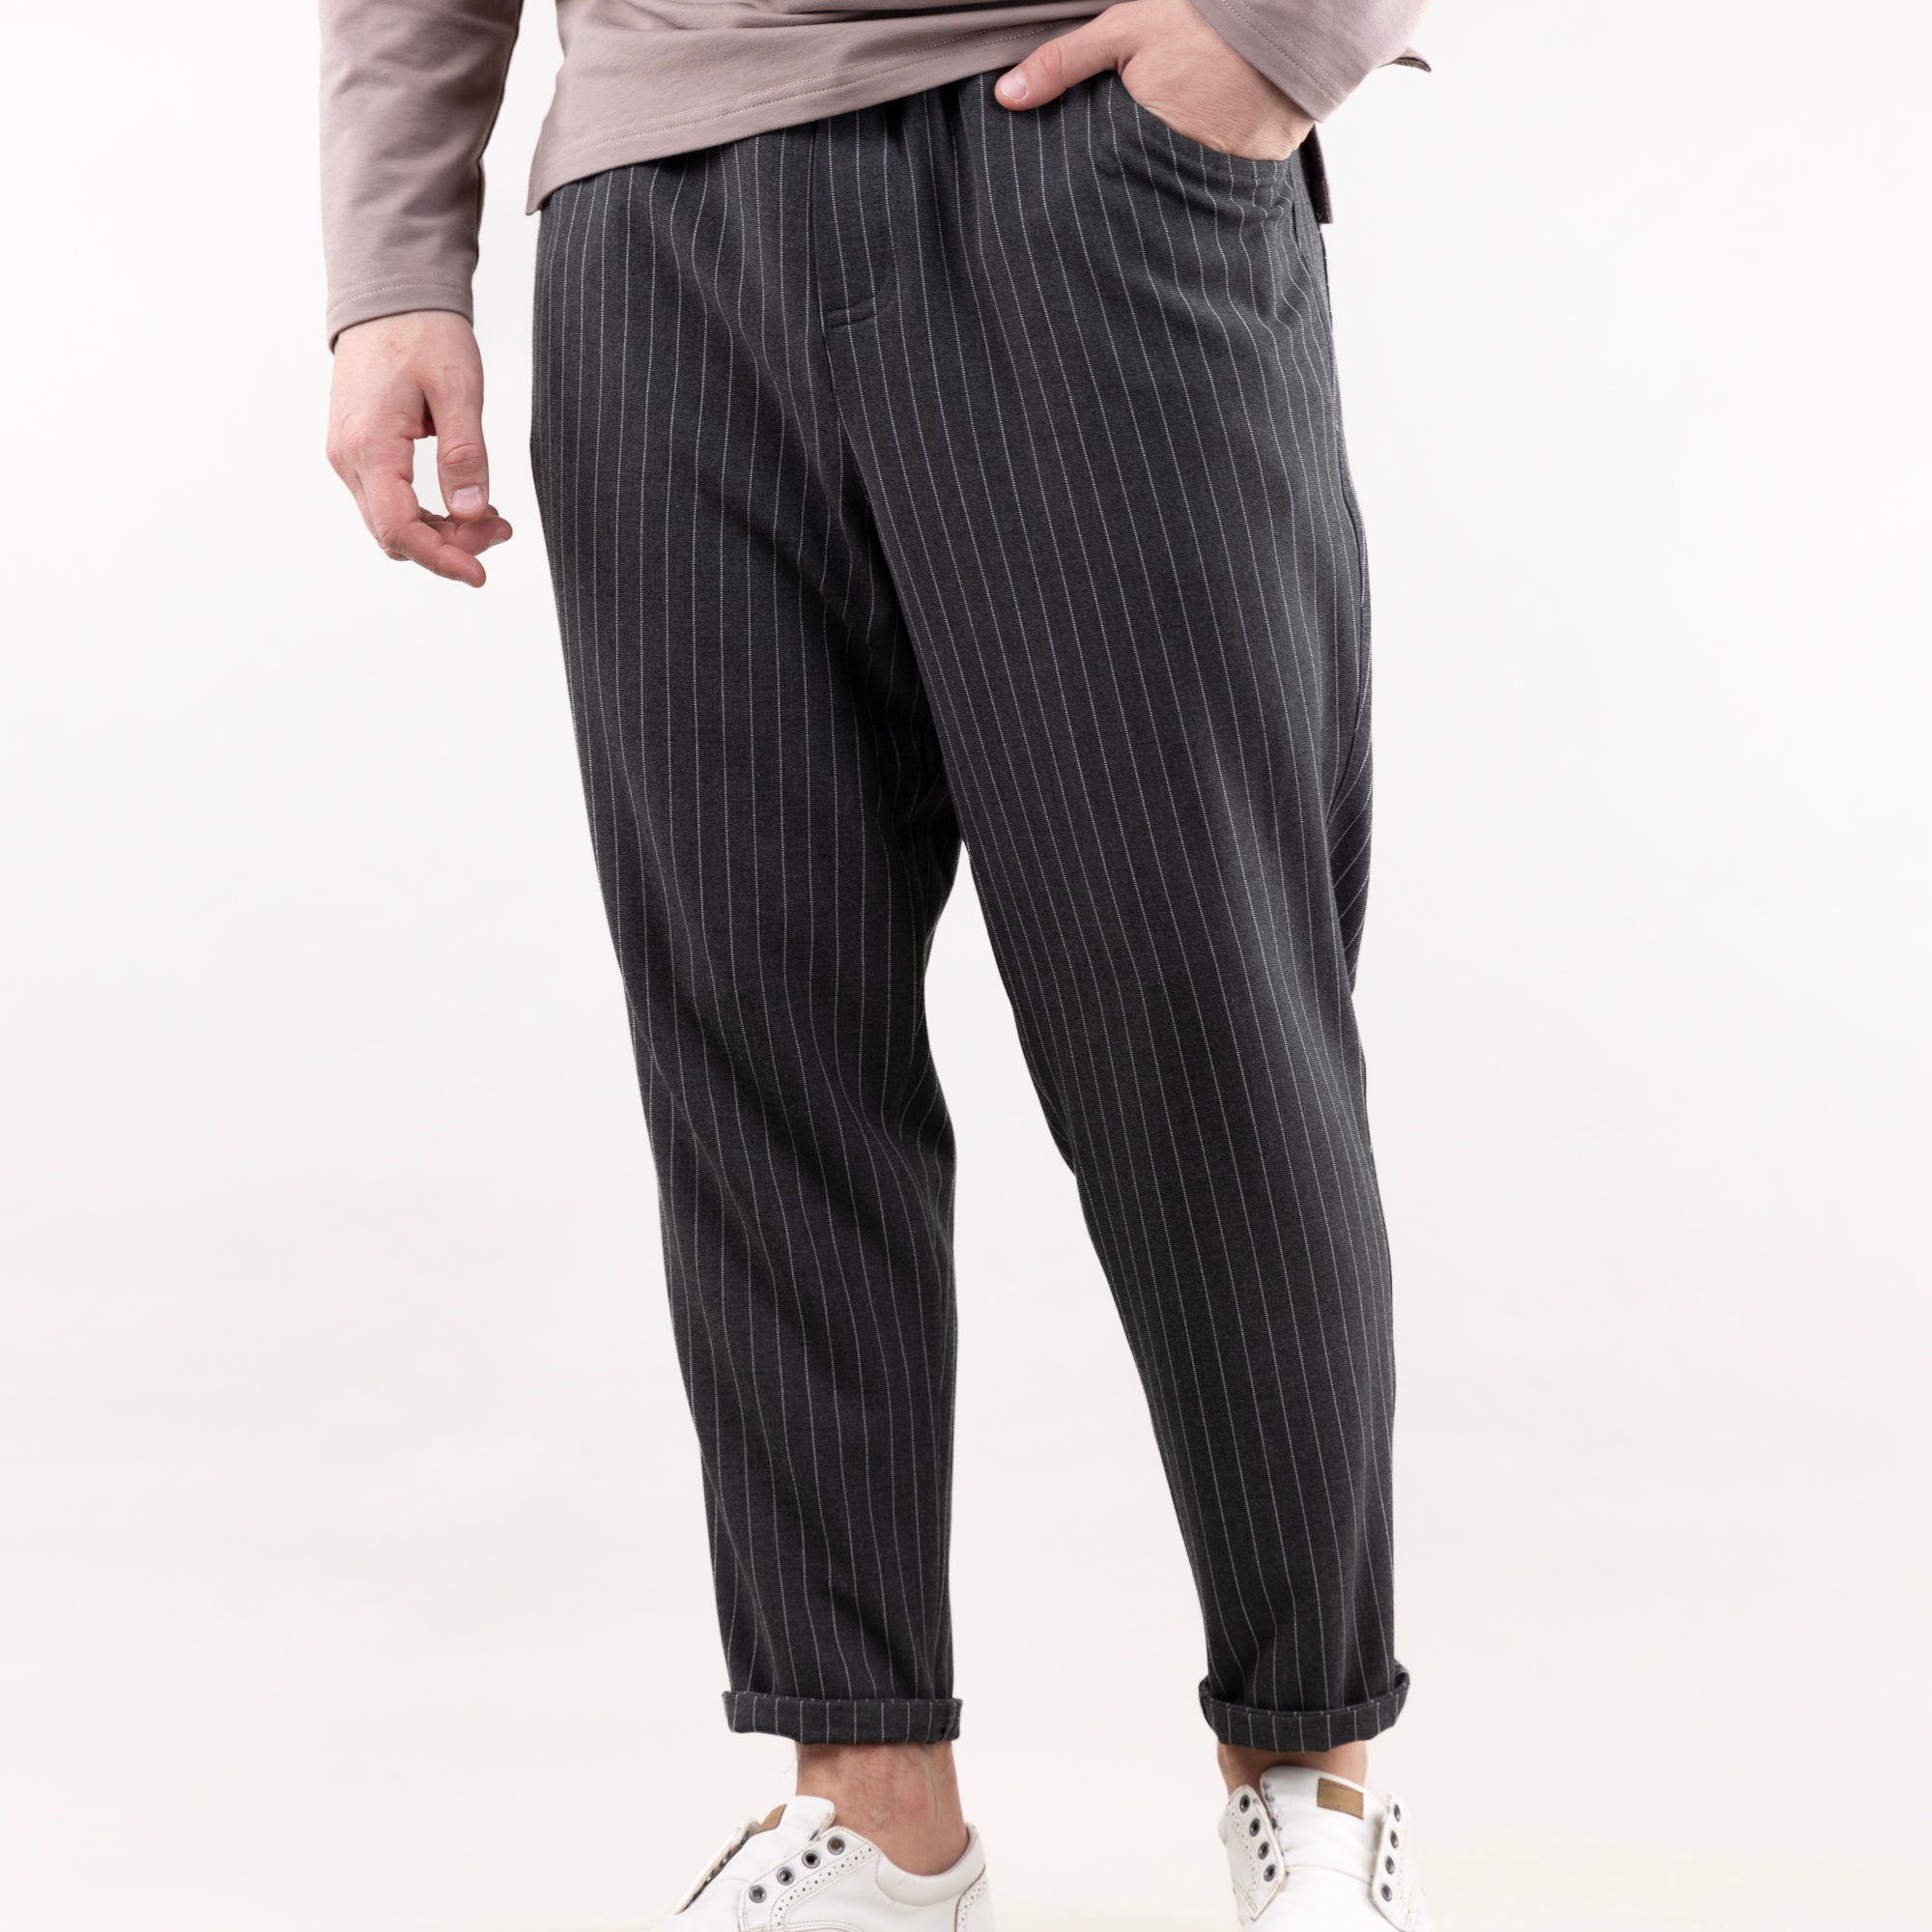 Men's Crop Pants, Casual Pants With Stripes